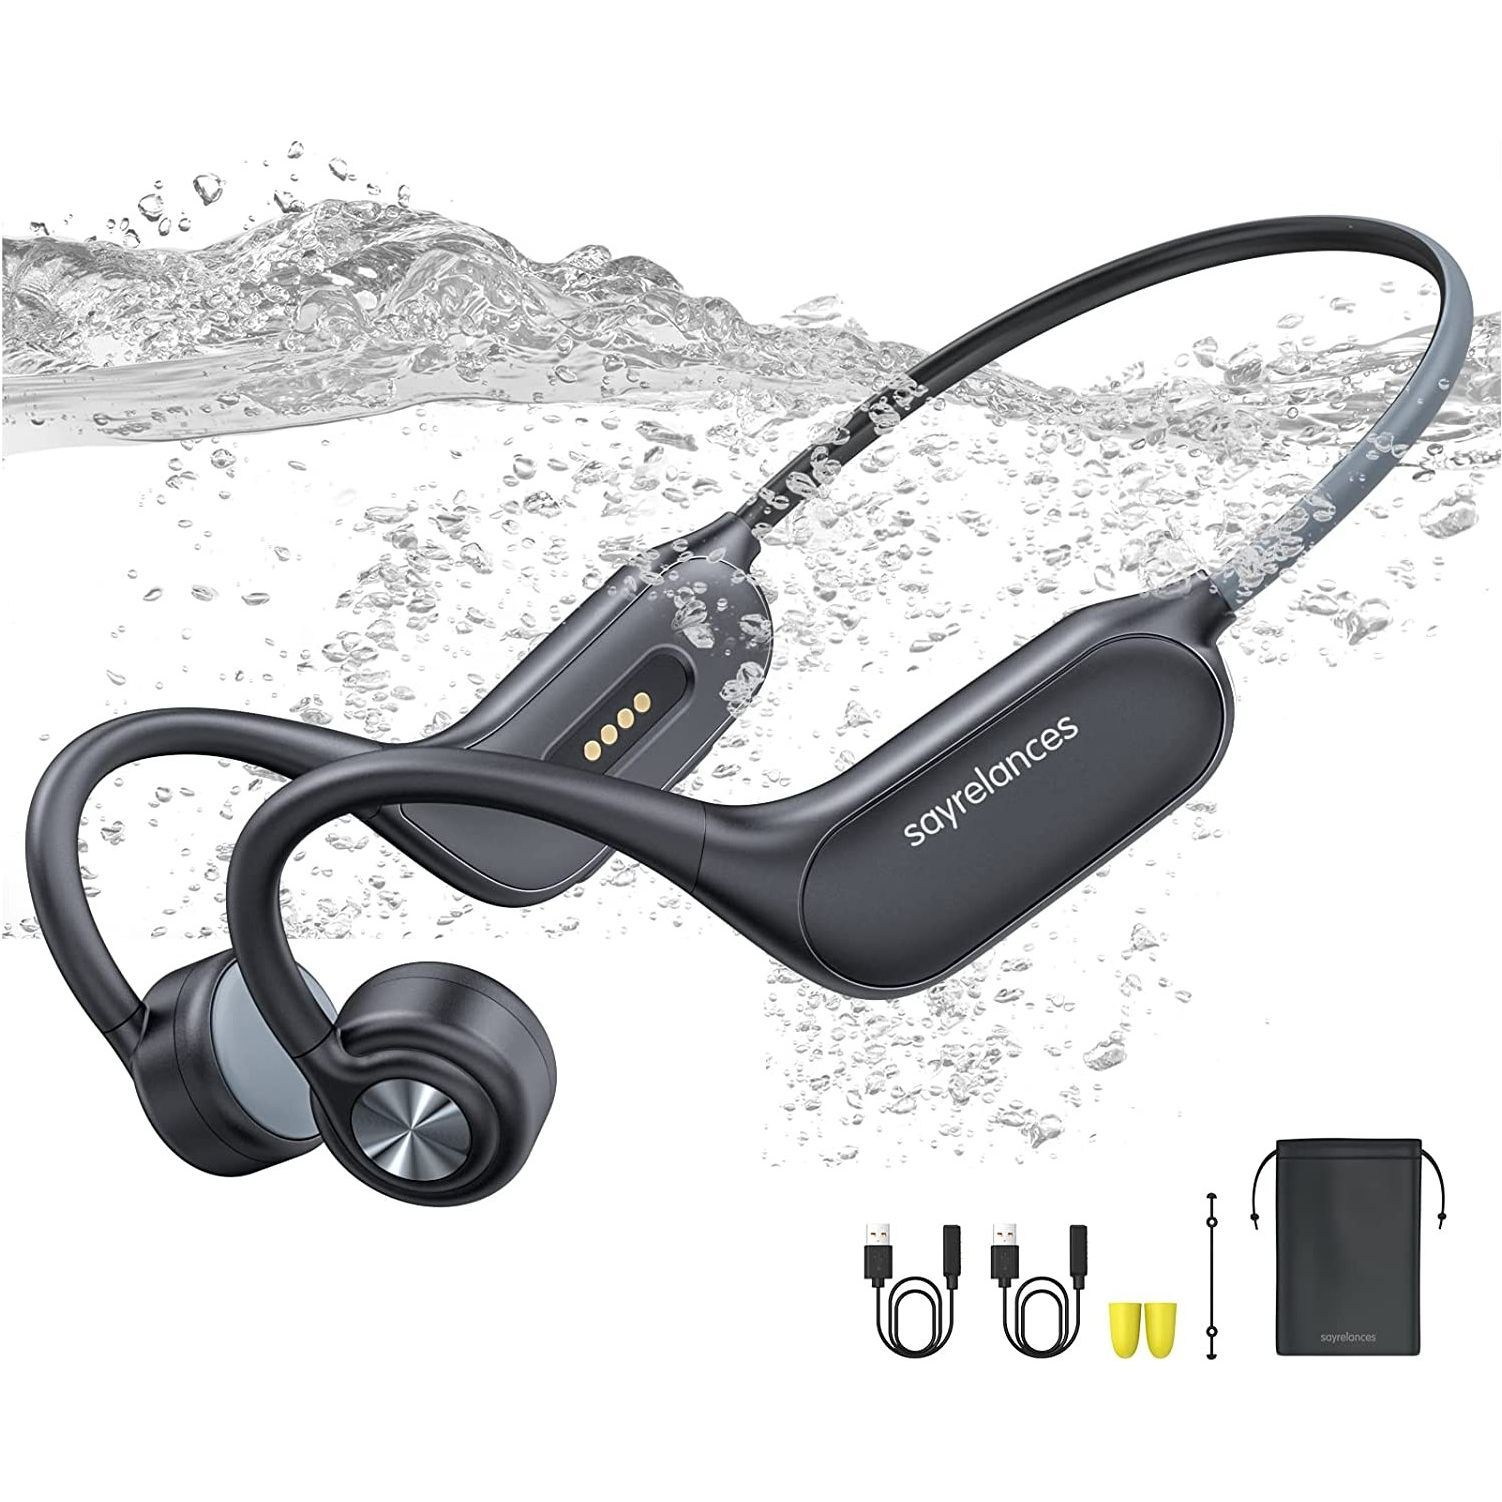 Sayrelances waterproof bone conduction headphones for swimming